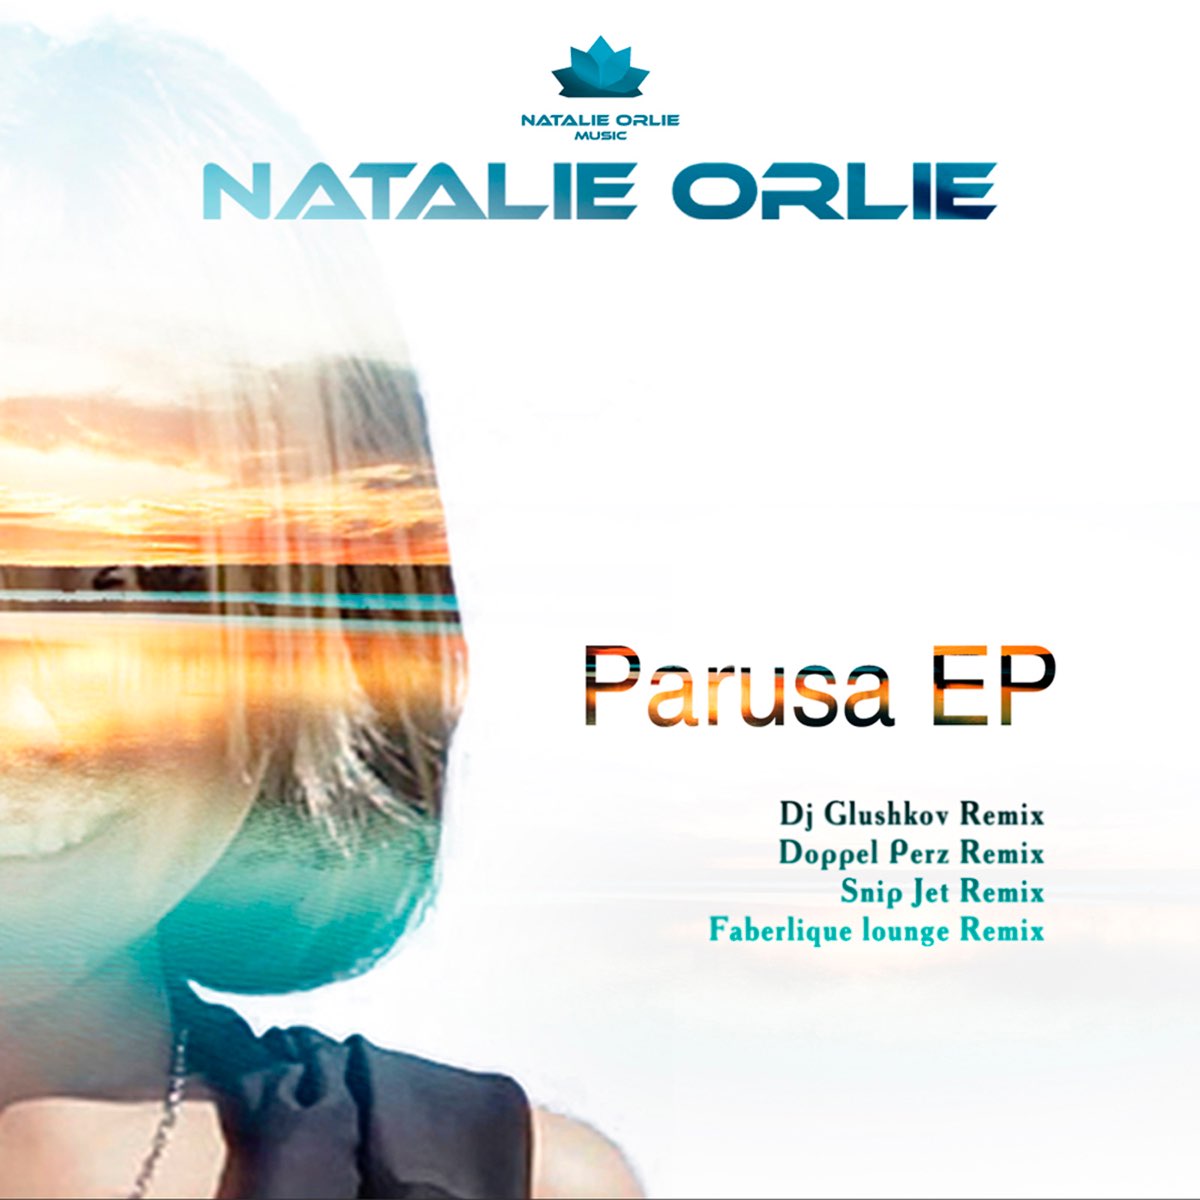 Natalie Orlie. Natalie Orlie солнце мое. Zuubi feat. Natalie Orlie - see you again (Alex h Remix).